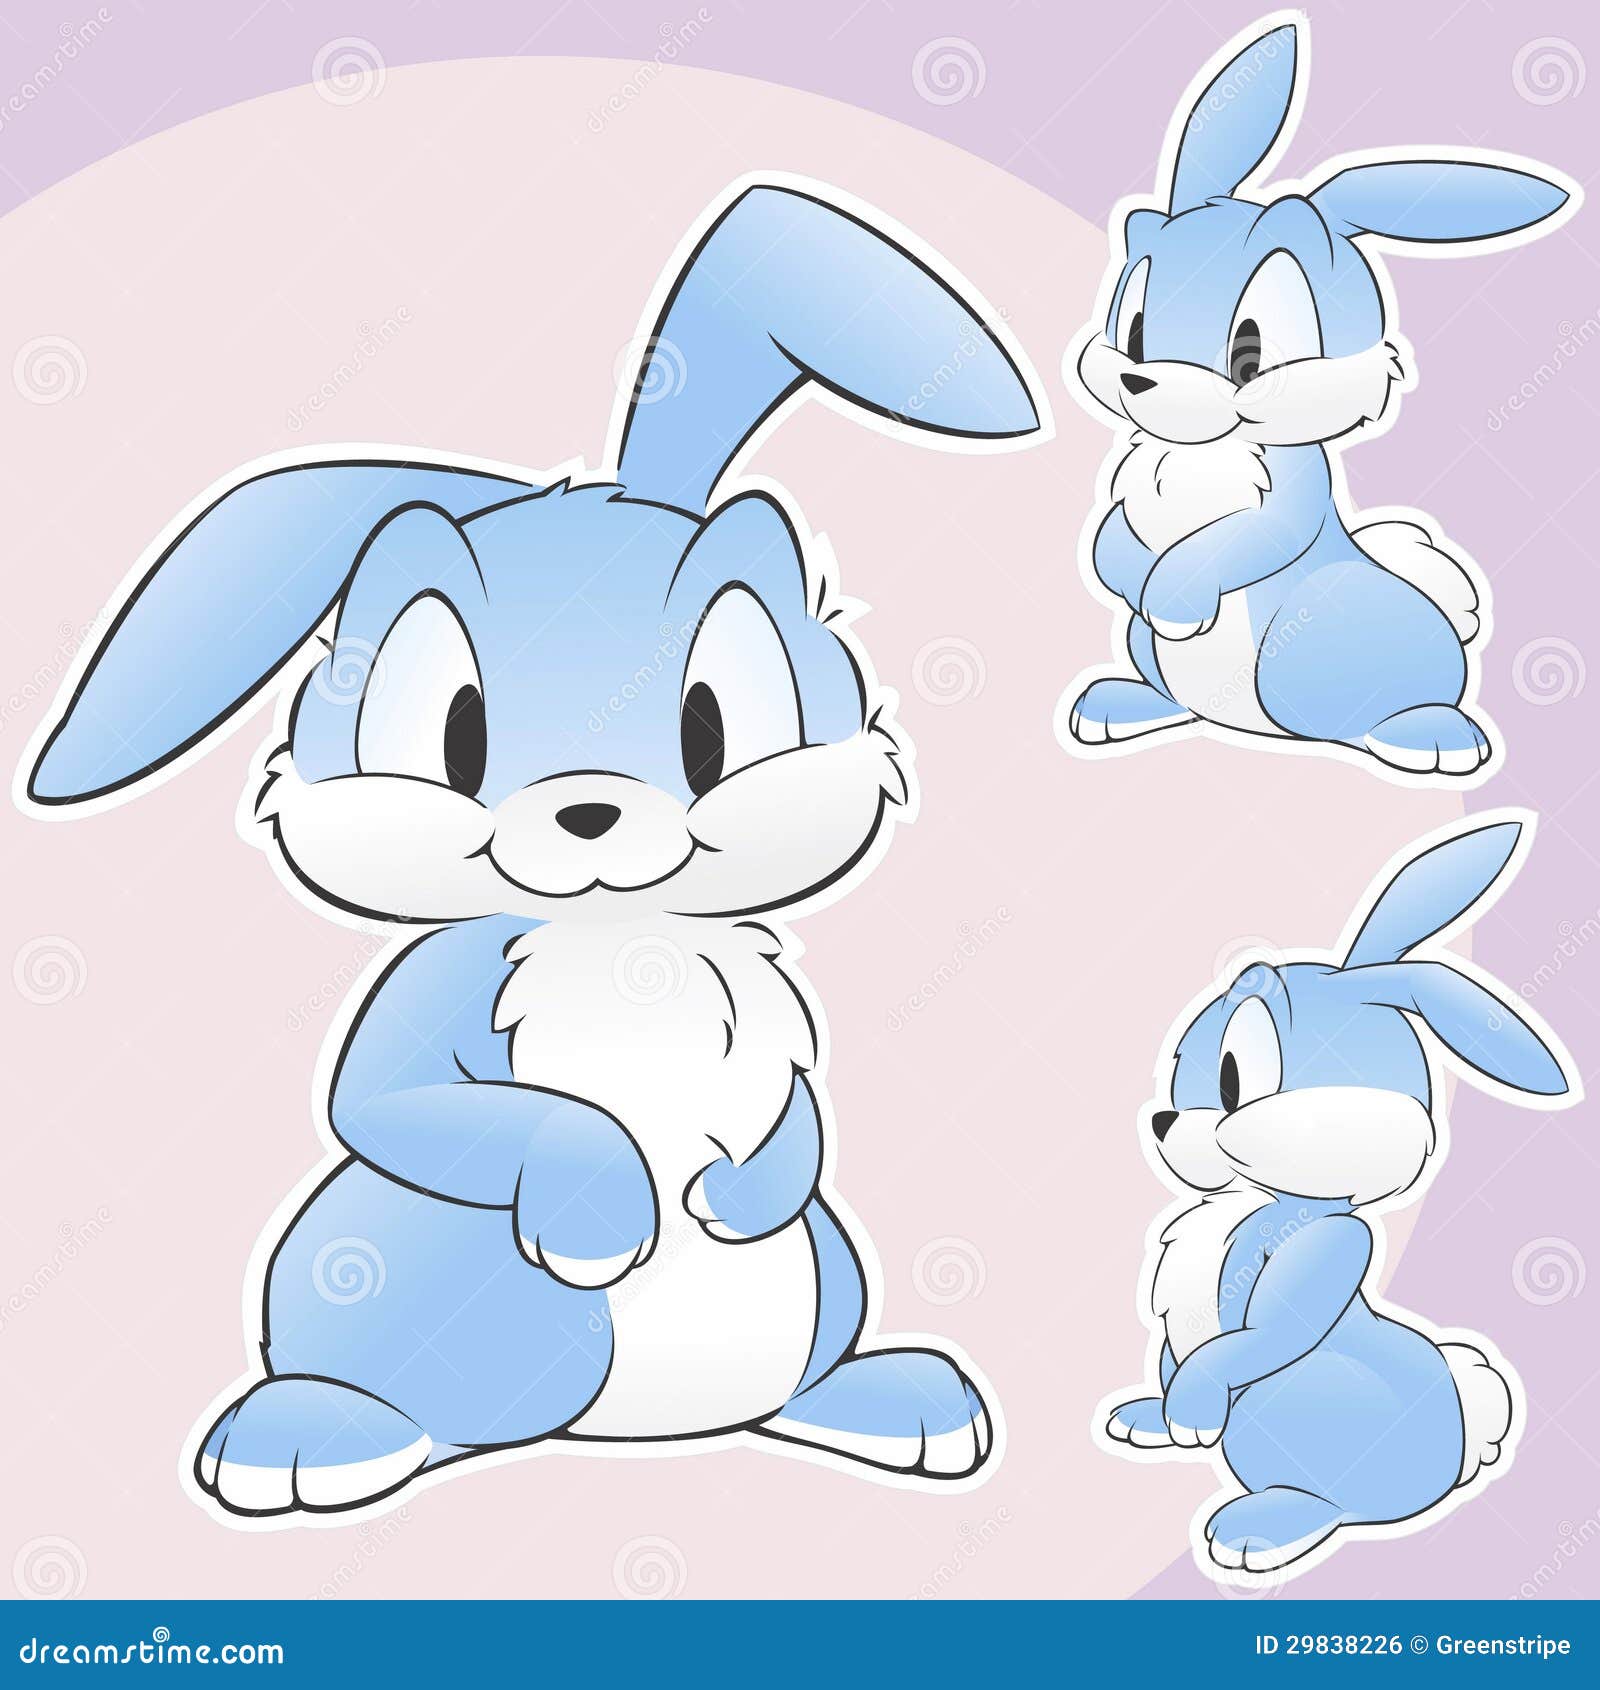 Cute Cartoon Rabbit Bunny Royalty Free Stock Image - Image: 29838226